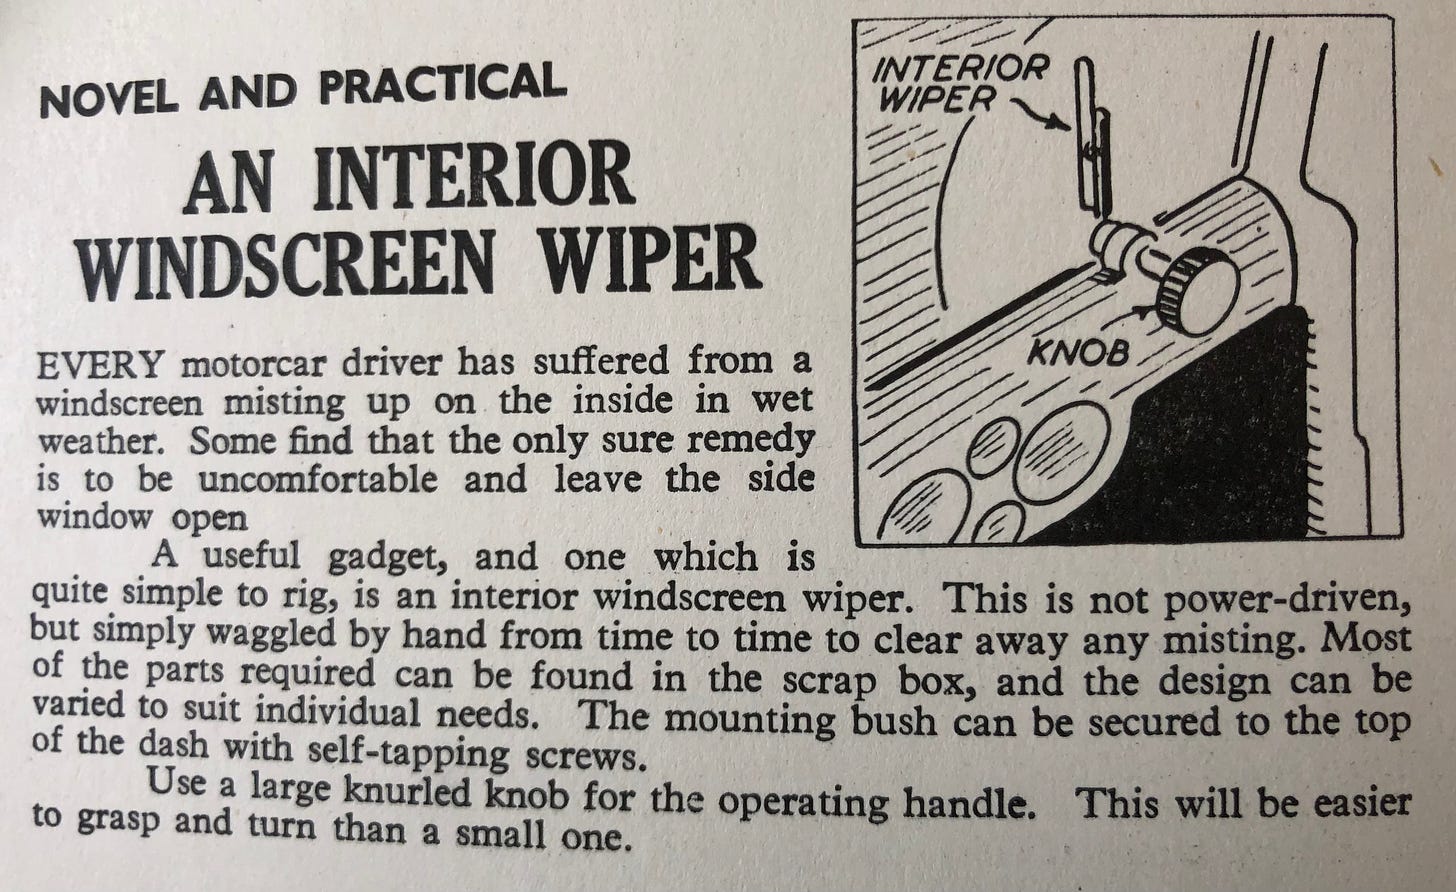 Title: Novel and practical, an interior windscreen wiper